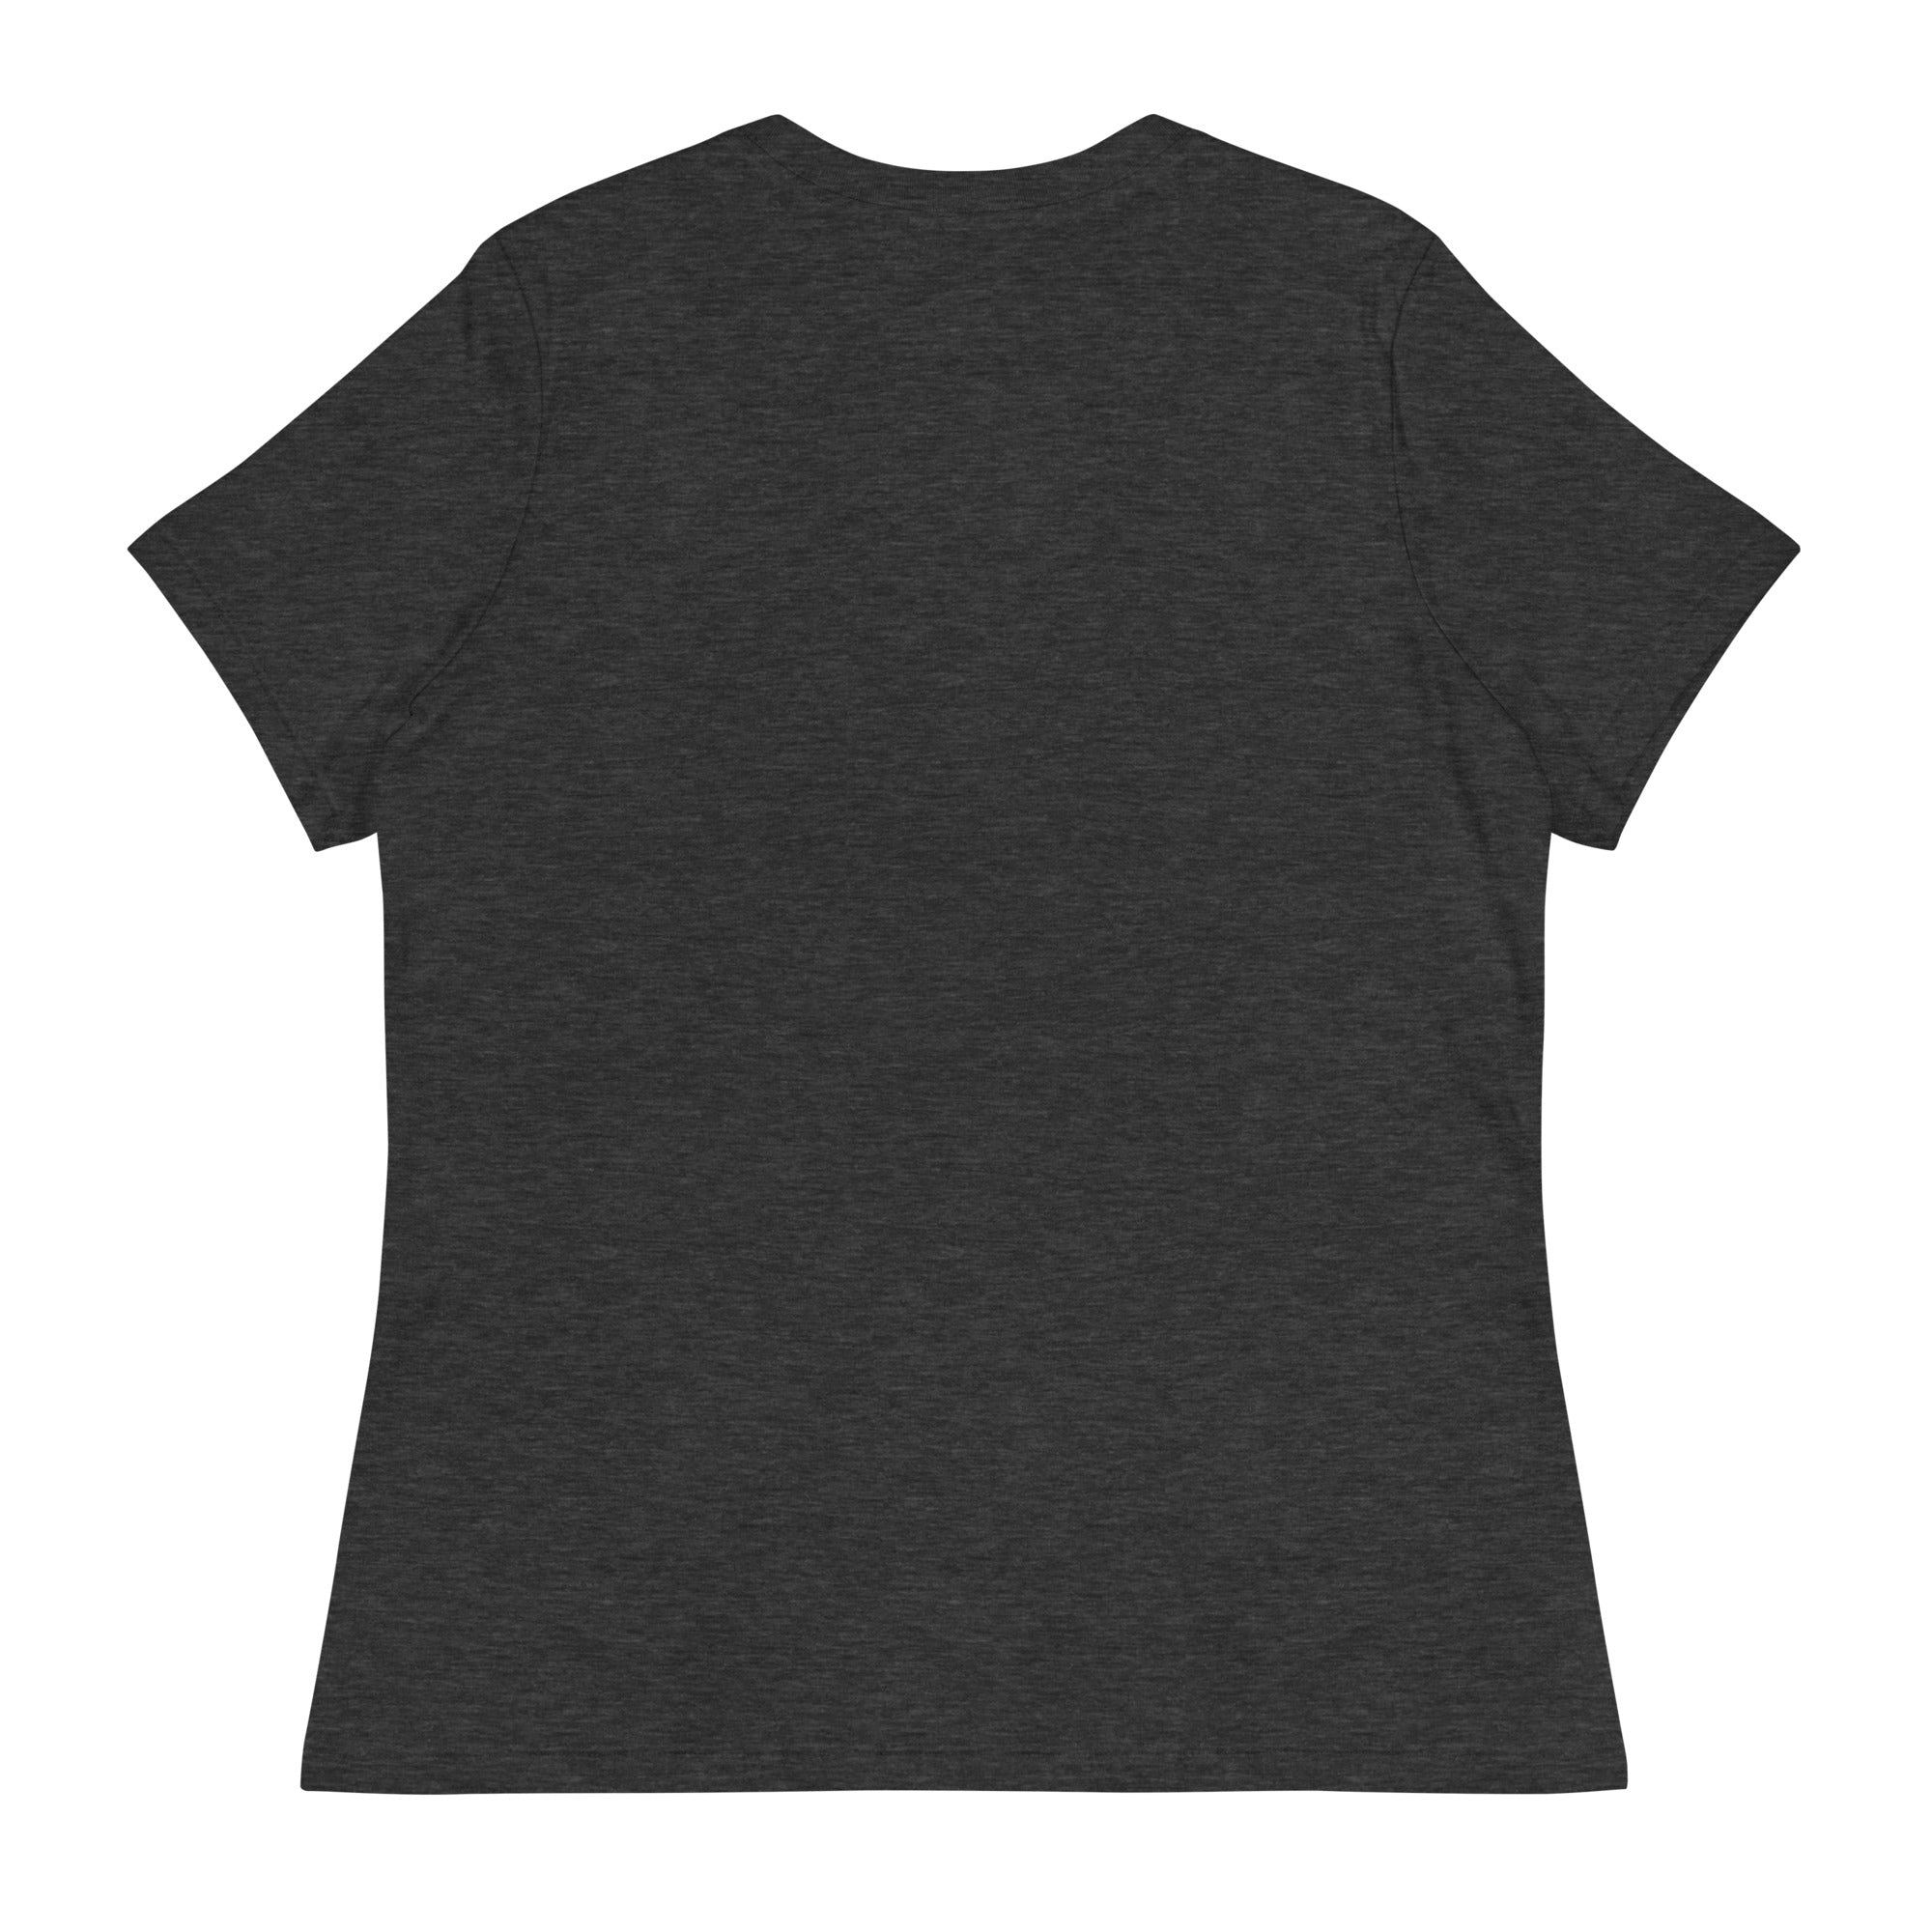 ESPRESSO - Women's Relaxed Fit Graphic T-Shirt in 16 Colors - Women's Relaxed Fit Graphic T-Shirt - DRAGON FOXX™ - 7218598_10193 - Dark Grey Heather - S - Athletic Heather T-shirt - Berry T-shirt - Black T-shirt